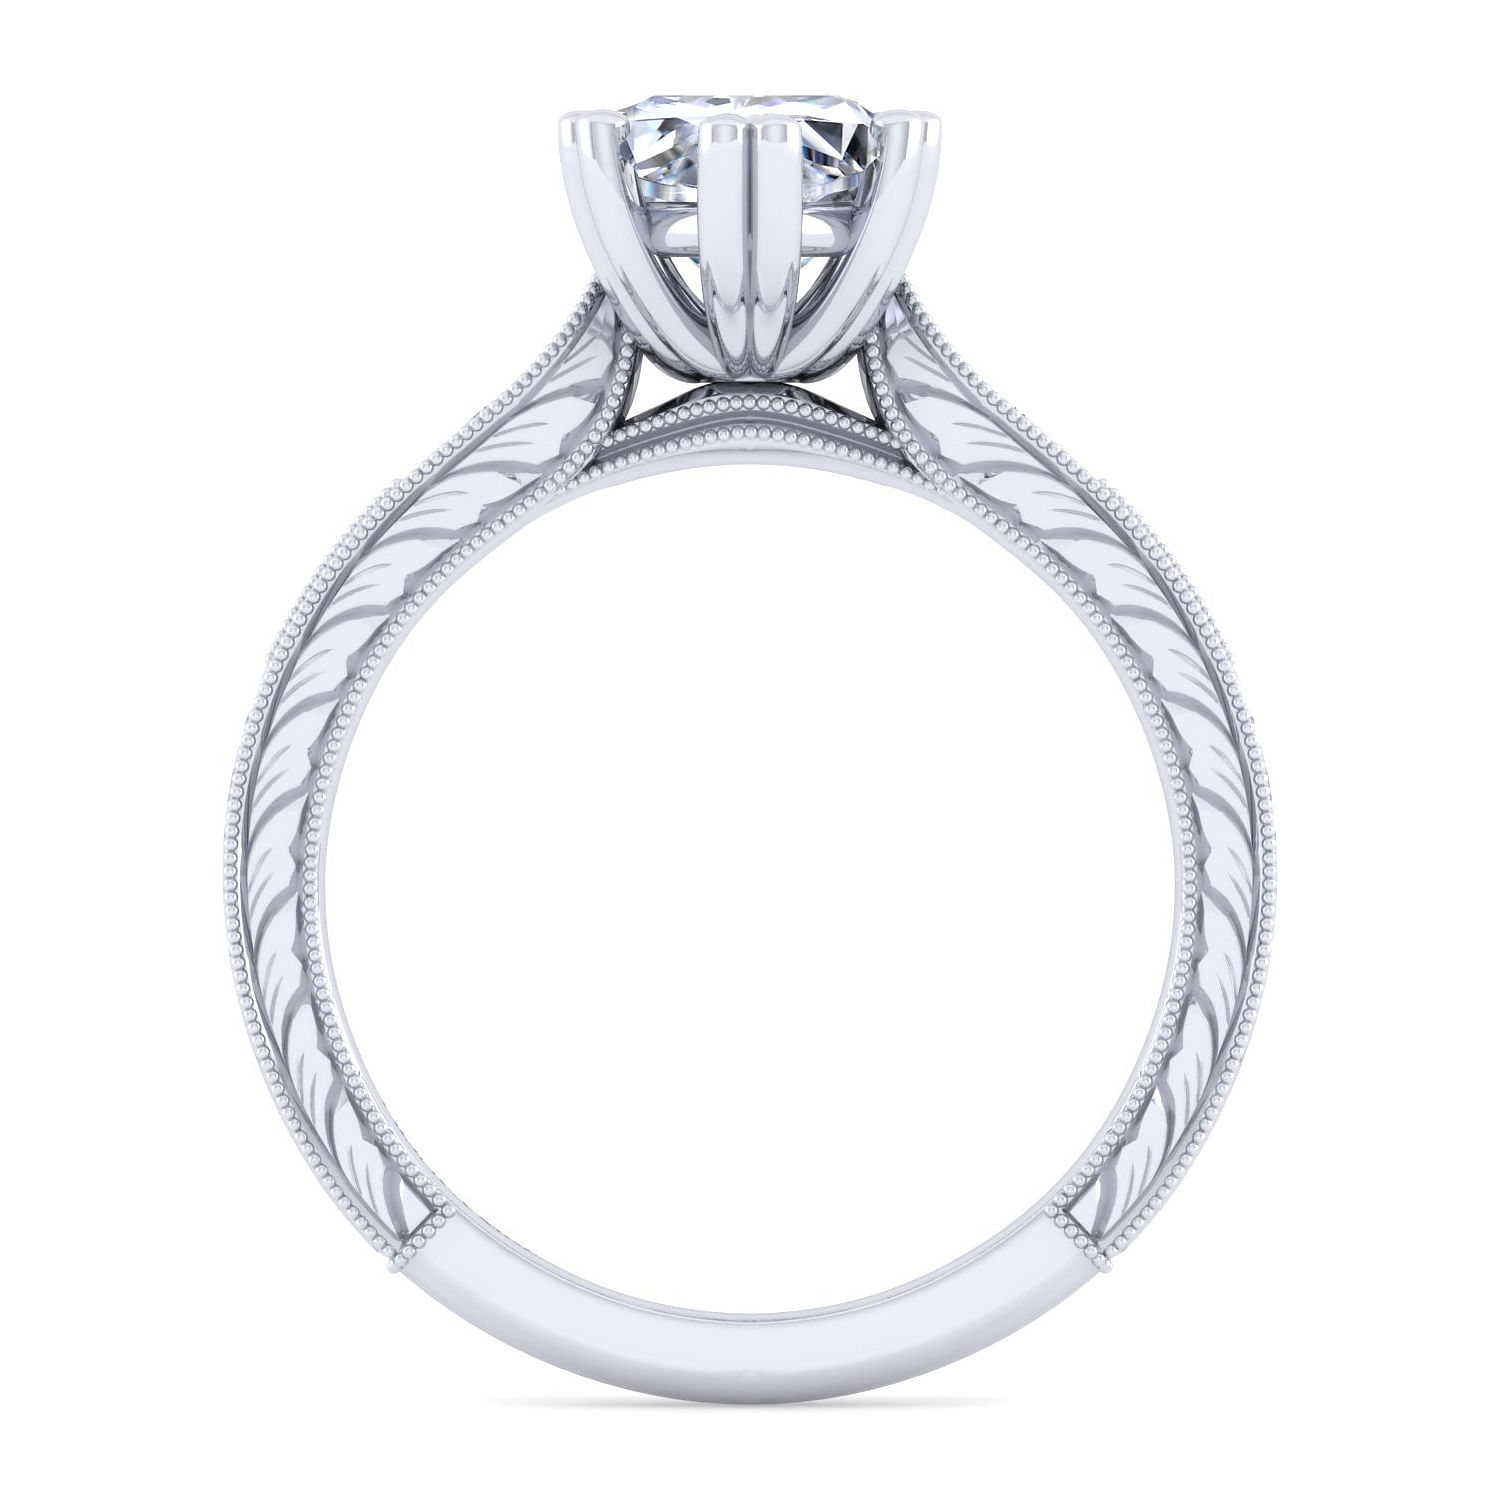 Vintage Inspired 14K White Gold Marquise Shape Diamond Engagement Ring